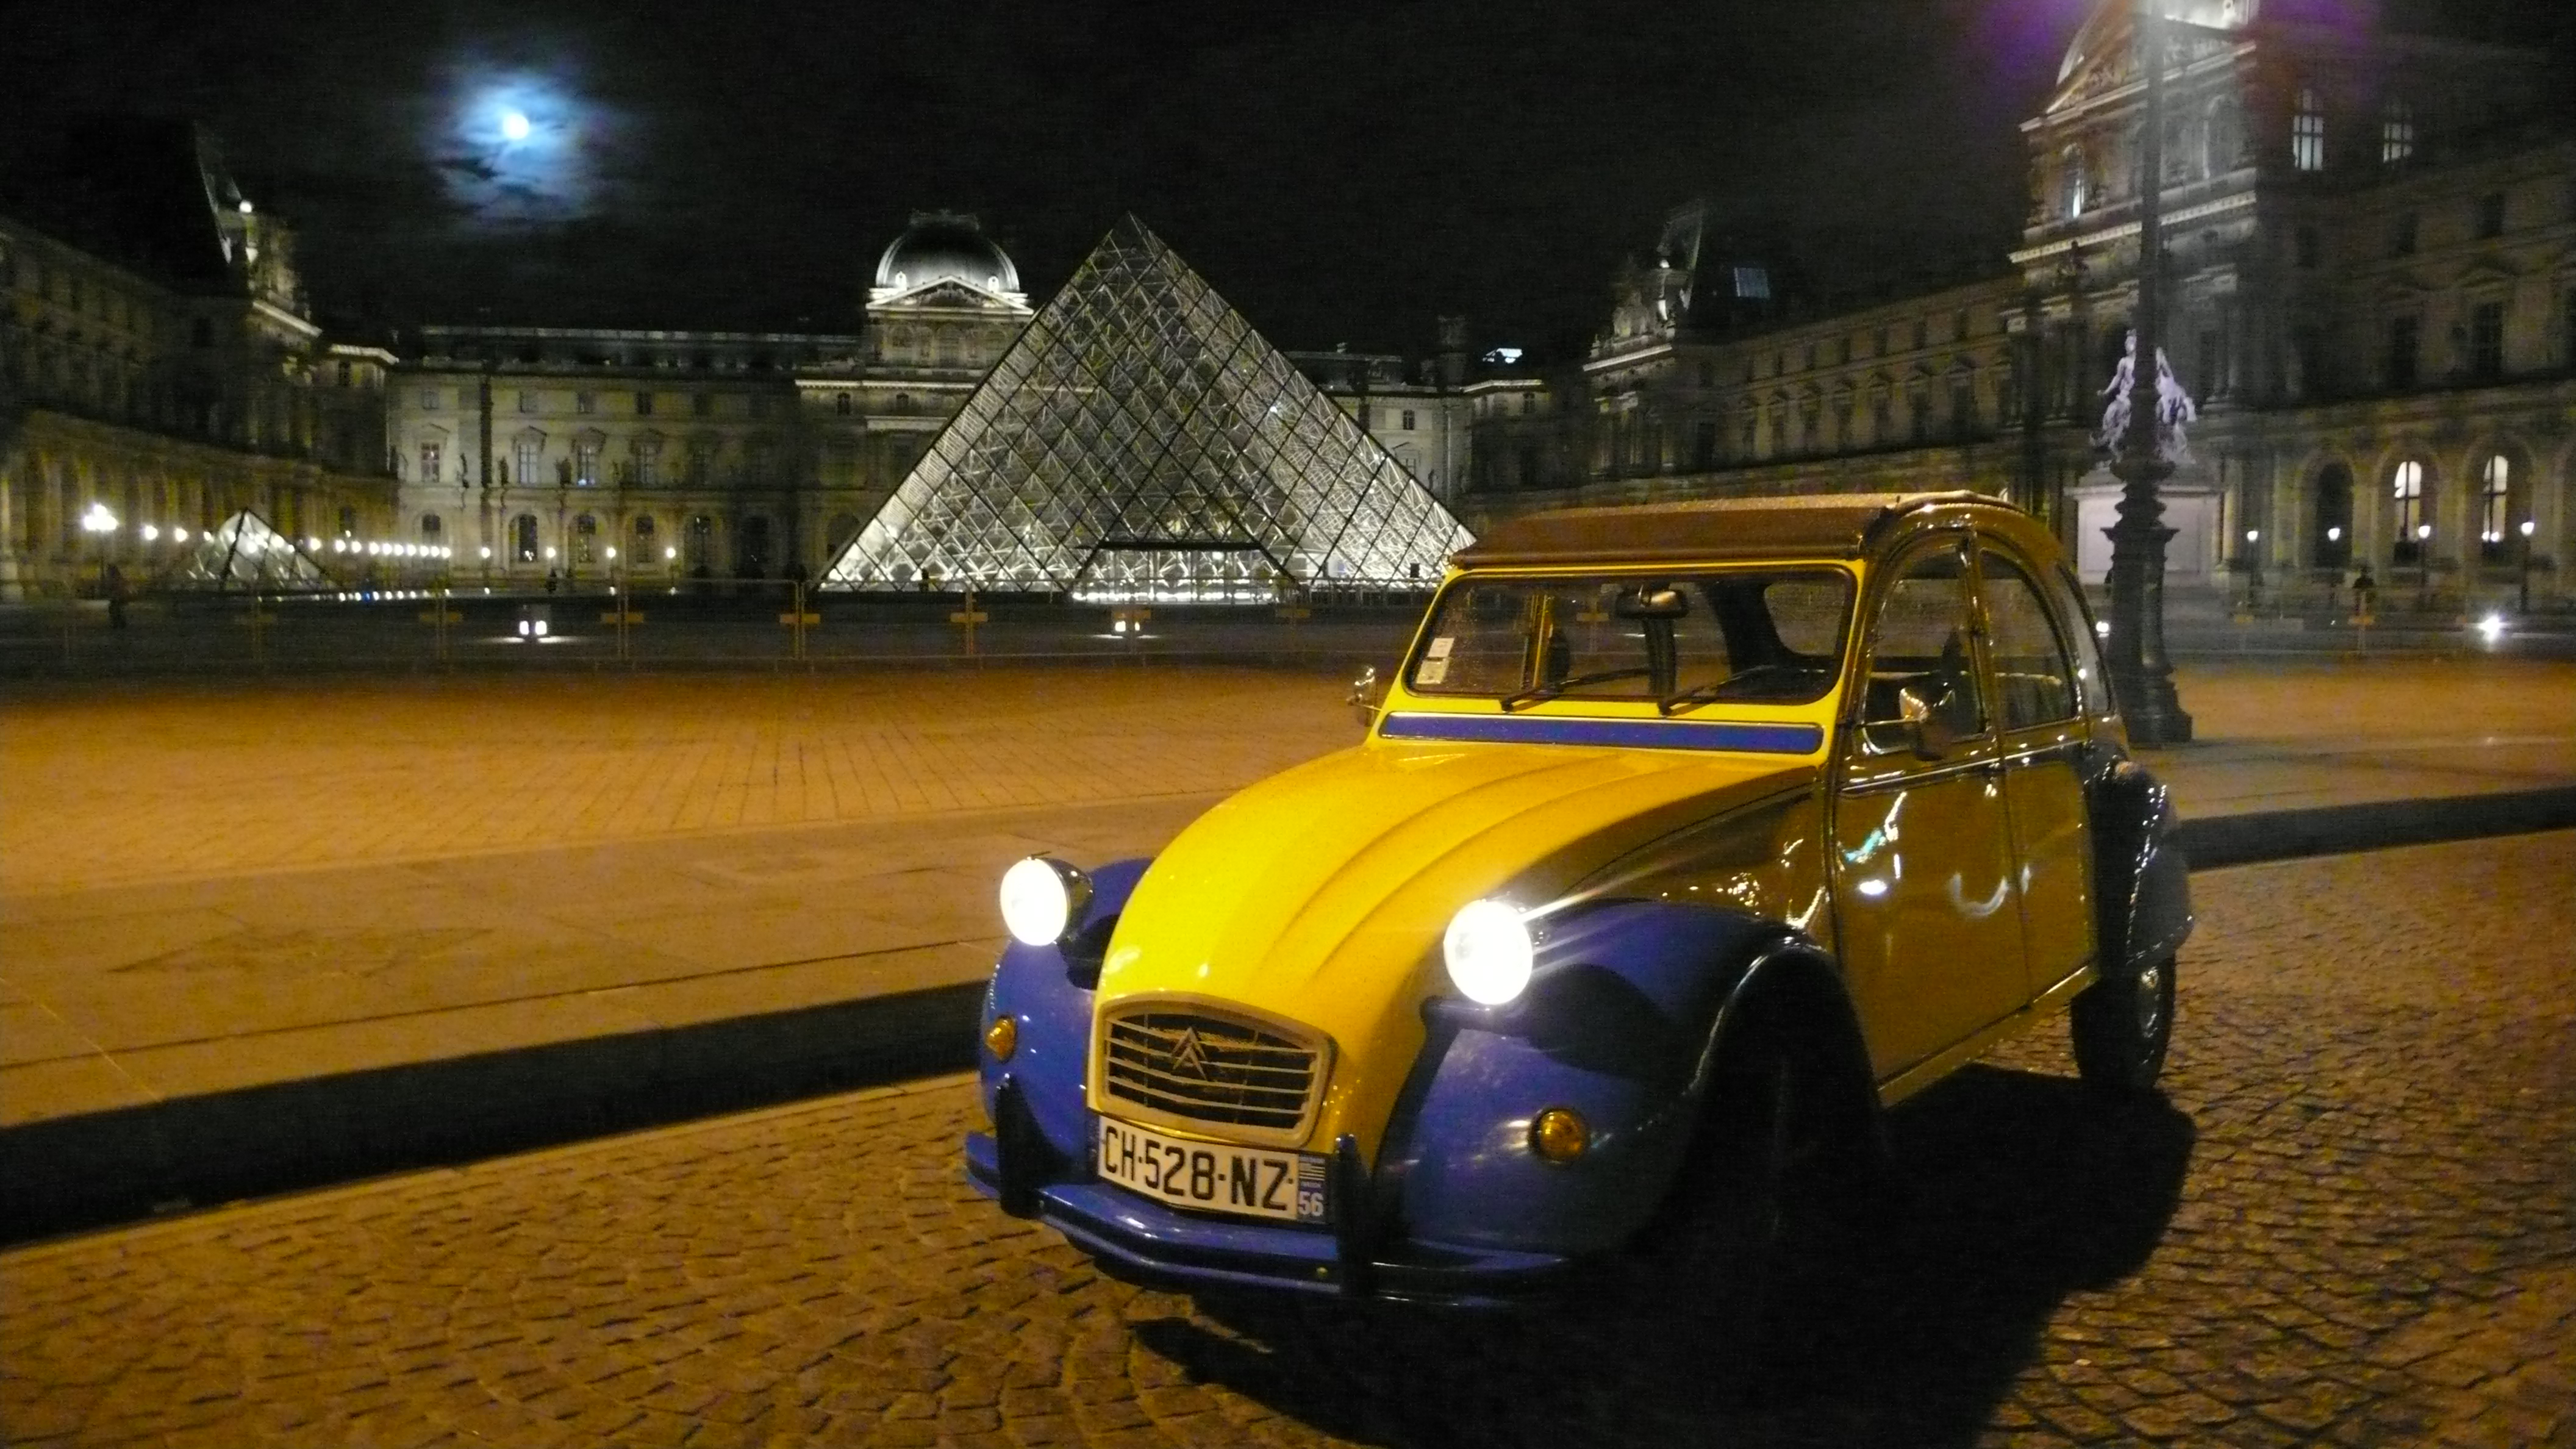 2CV Paris Tour - Visit Paris in a french 2CV! The Louvre Museum by night